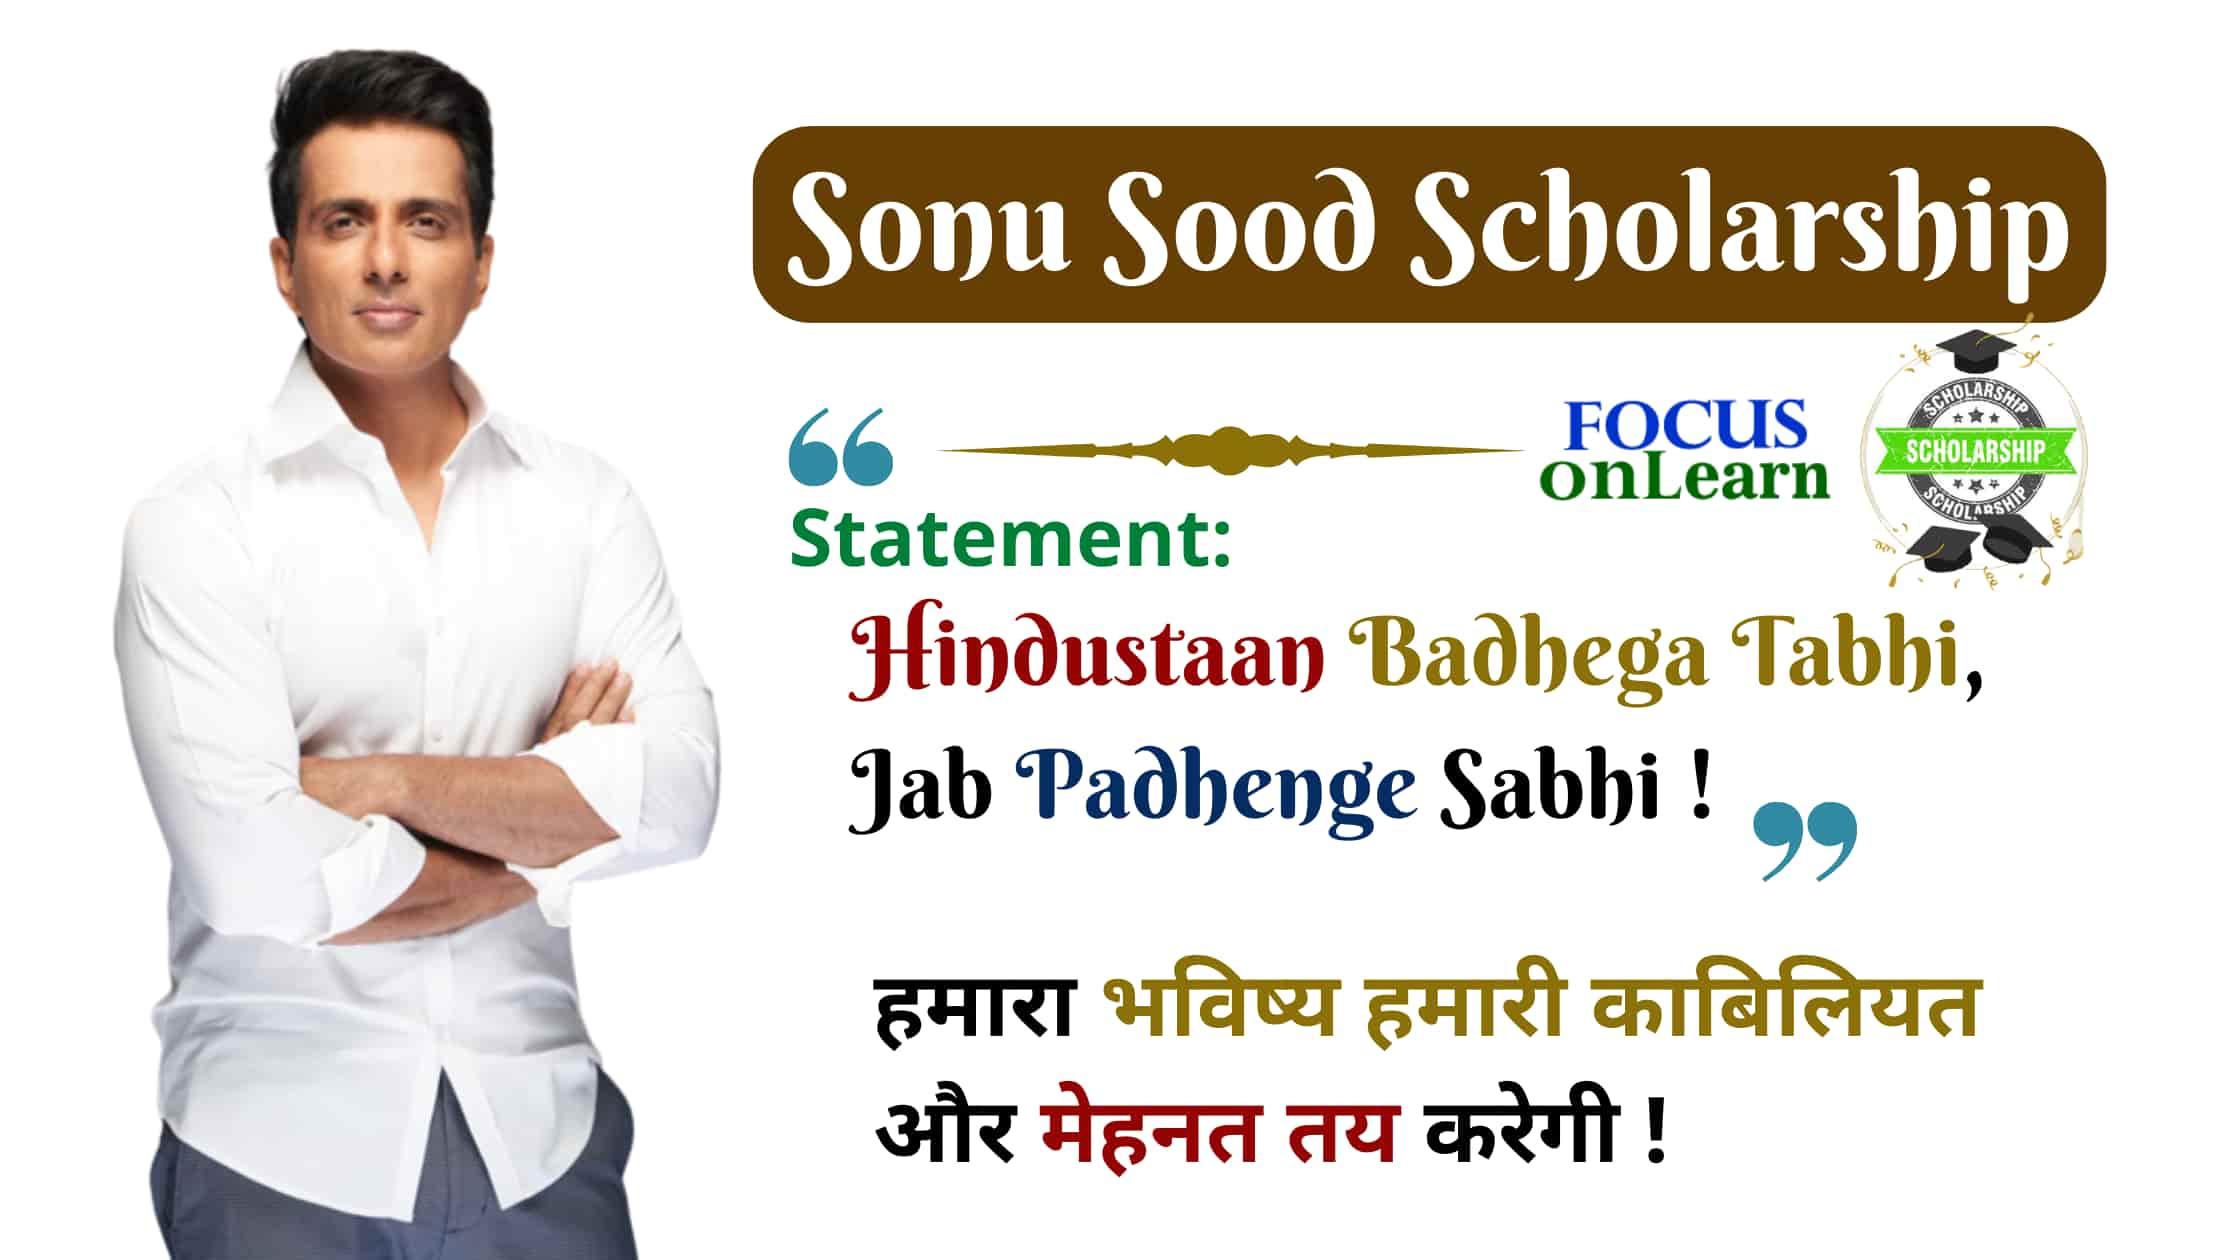 Sonu Sood Scholarship in Hindi